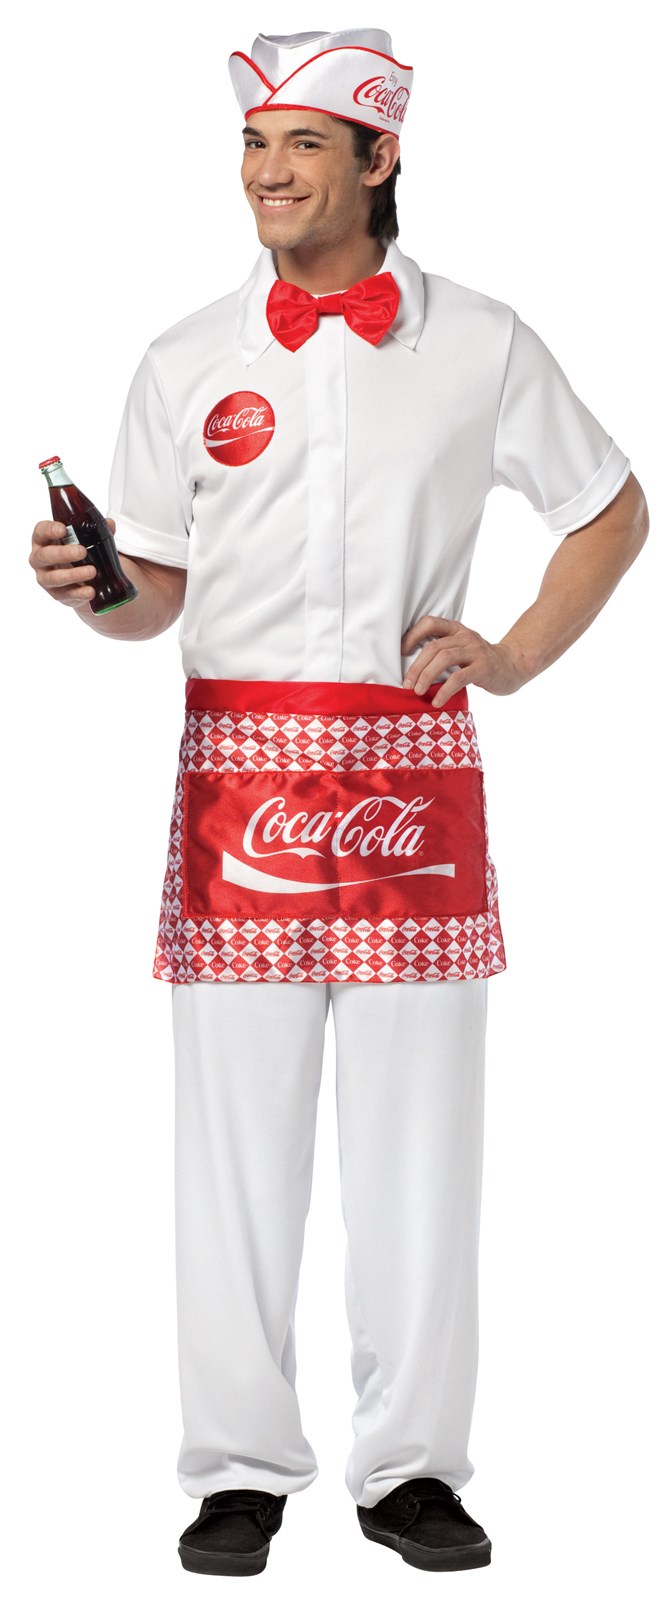 Coca-Cola – Soda Jerk Man Adult Costume